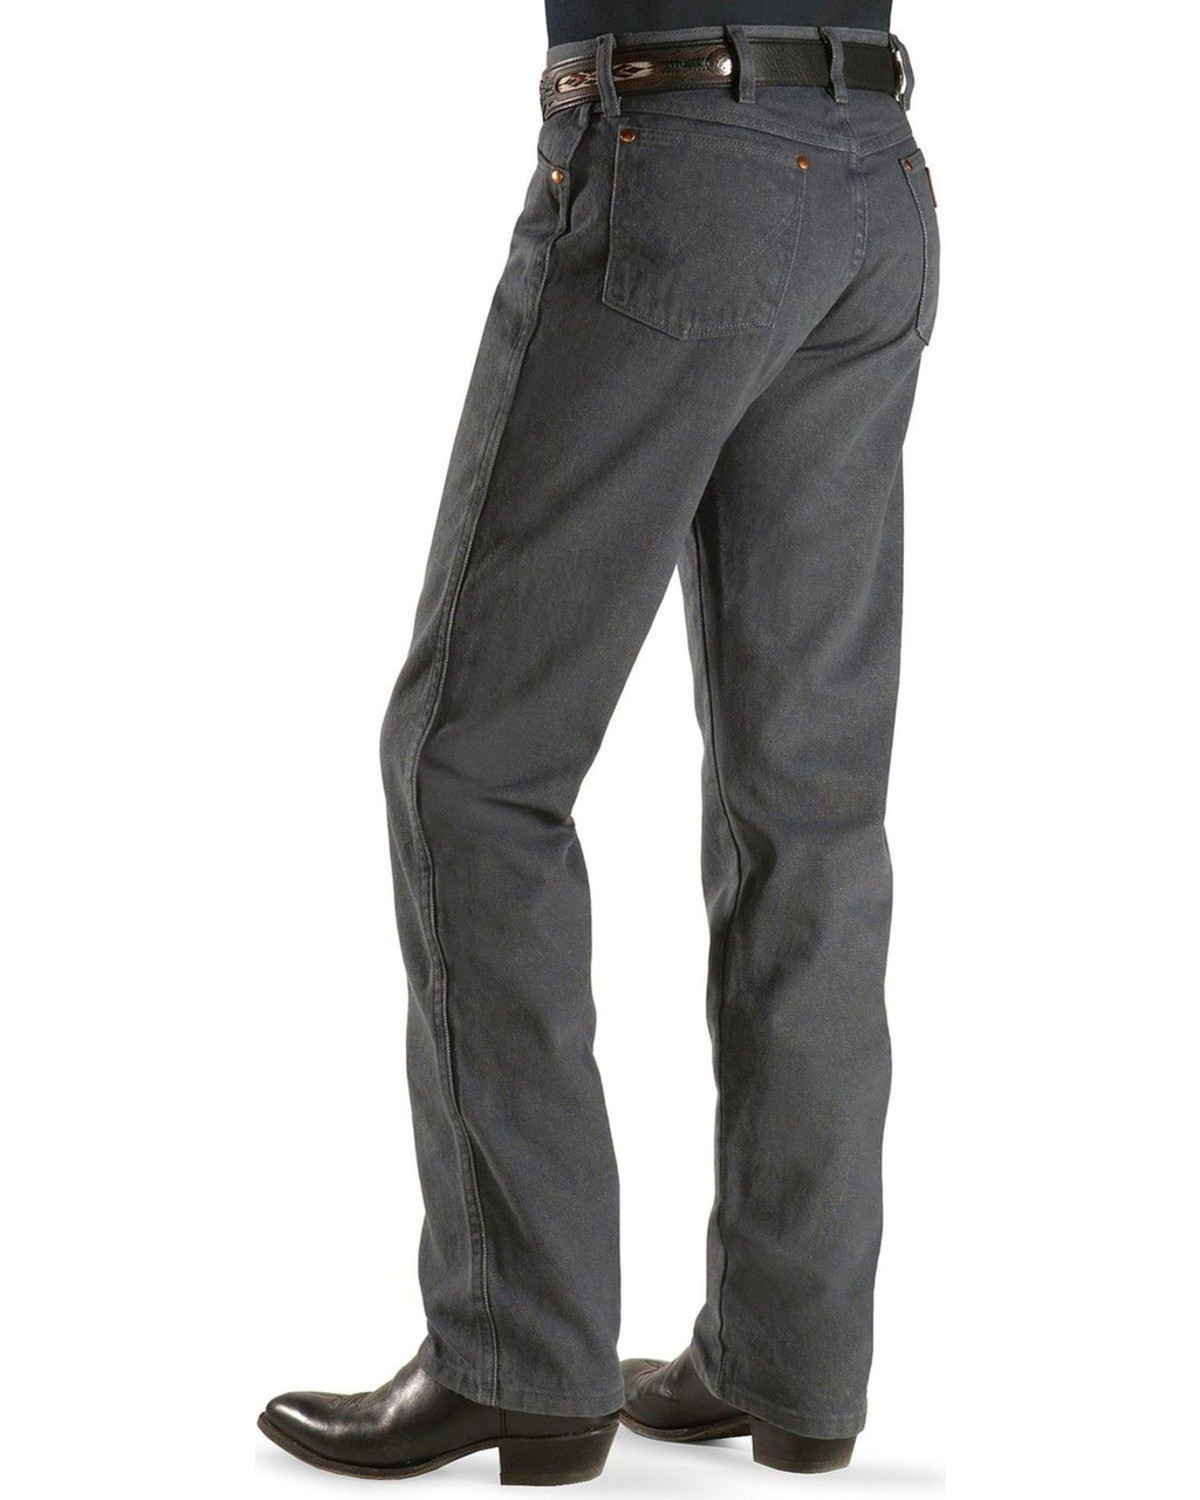 Wrangler 13MWZ Cowboy Cut Original Fit Jeans - Prewashed Colors Tall